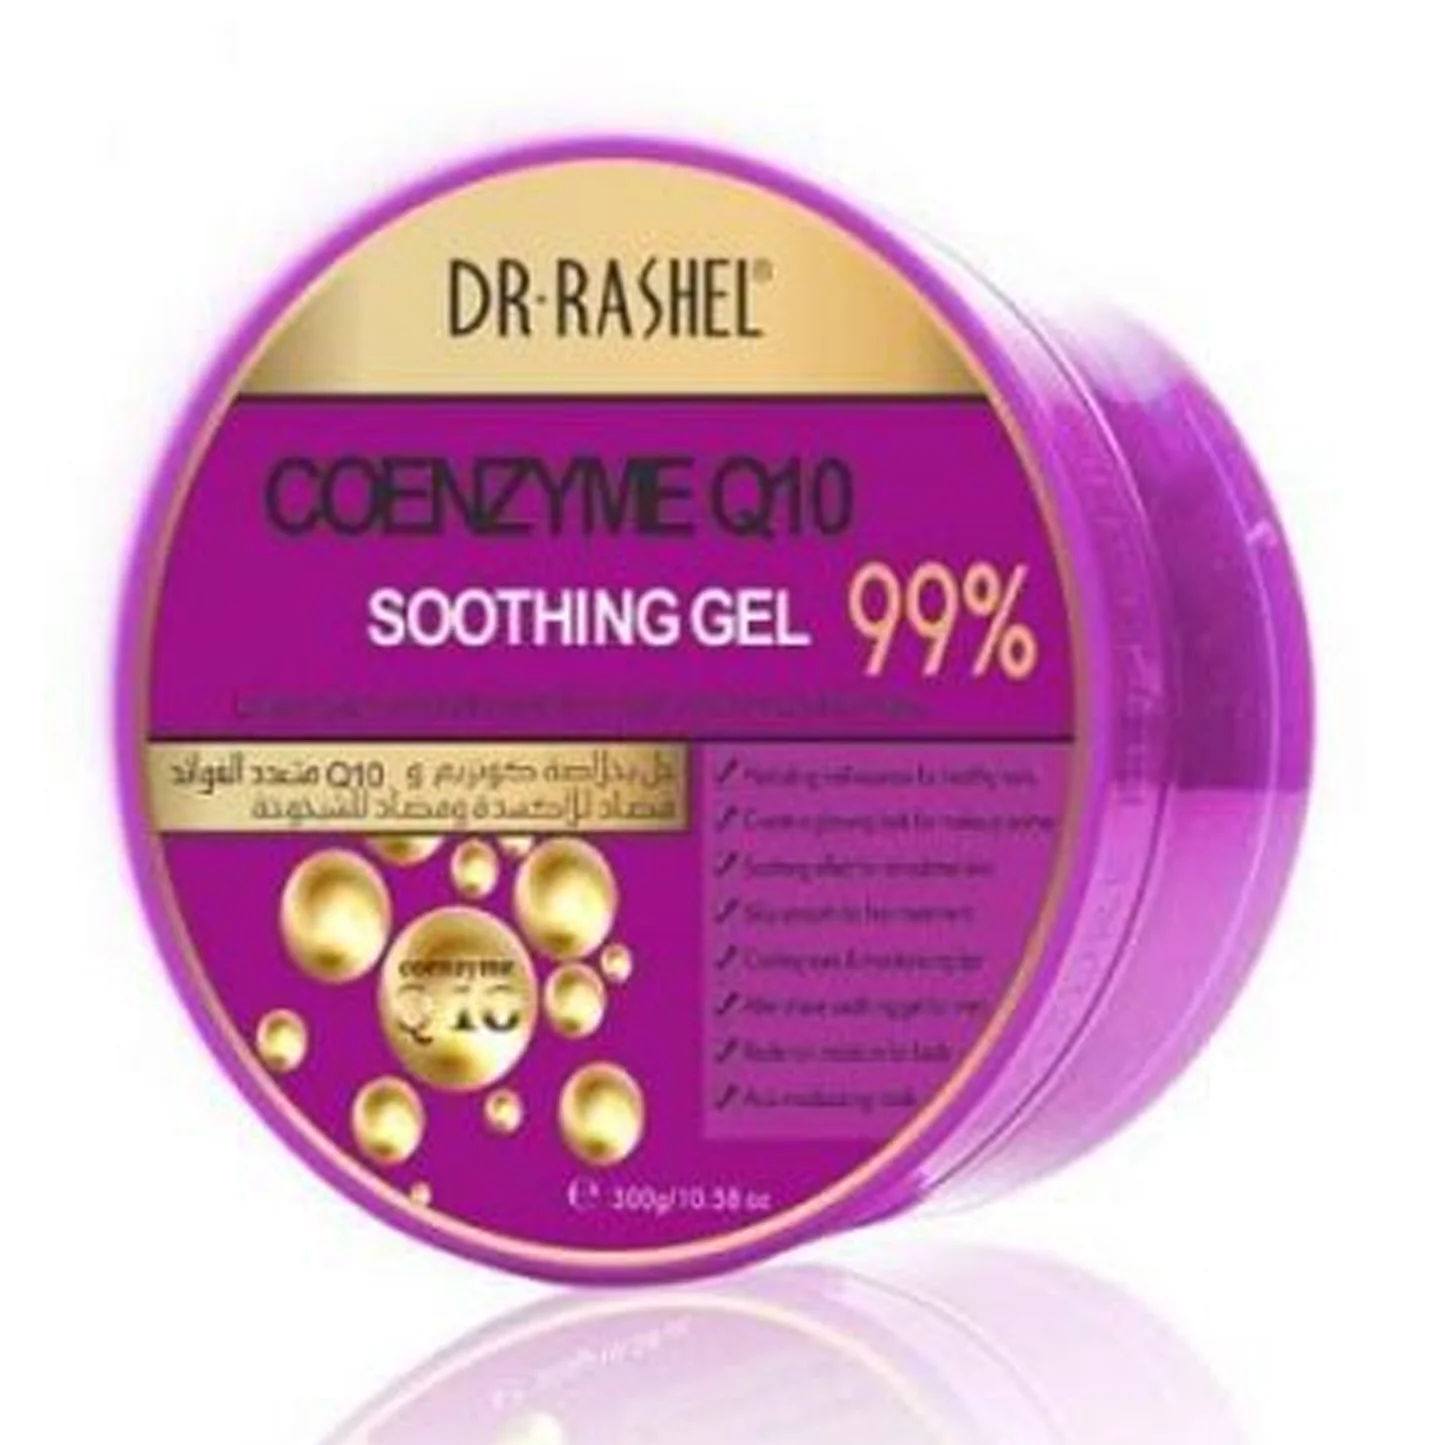 Dr. Rashel Coenzyme Q10 Soothing Gel 99%